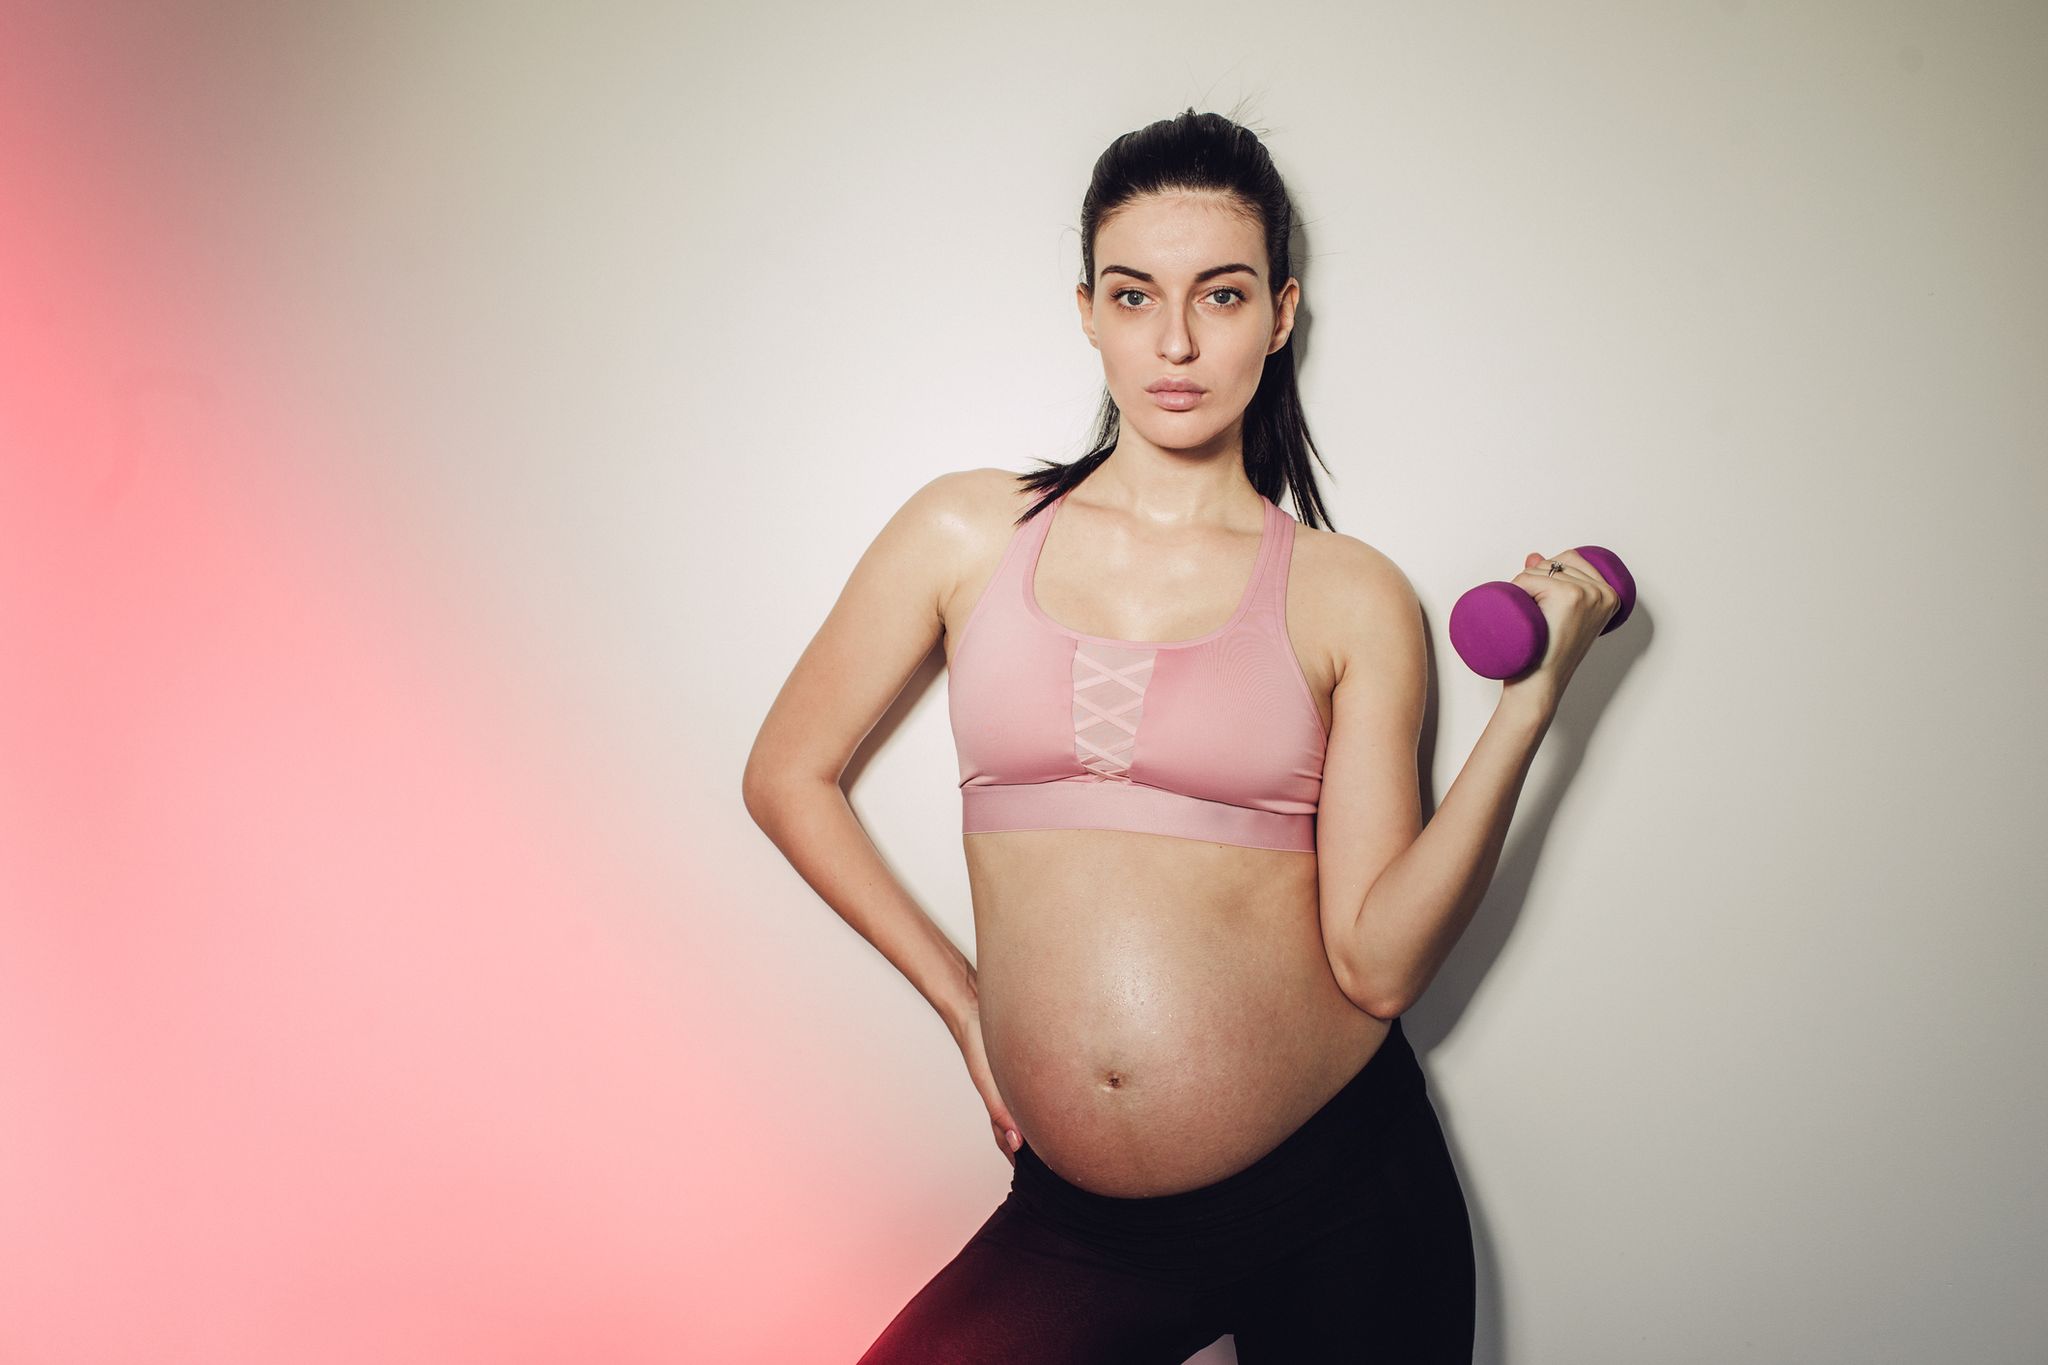 pregnancy exercise   pregnancy workout